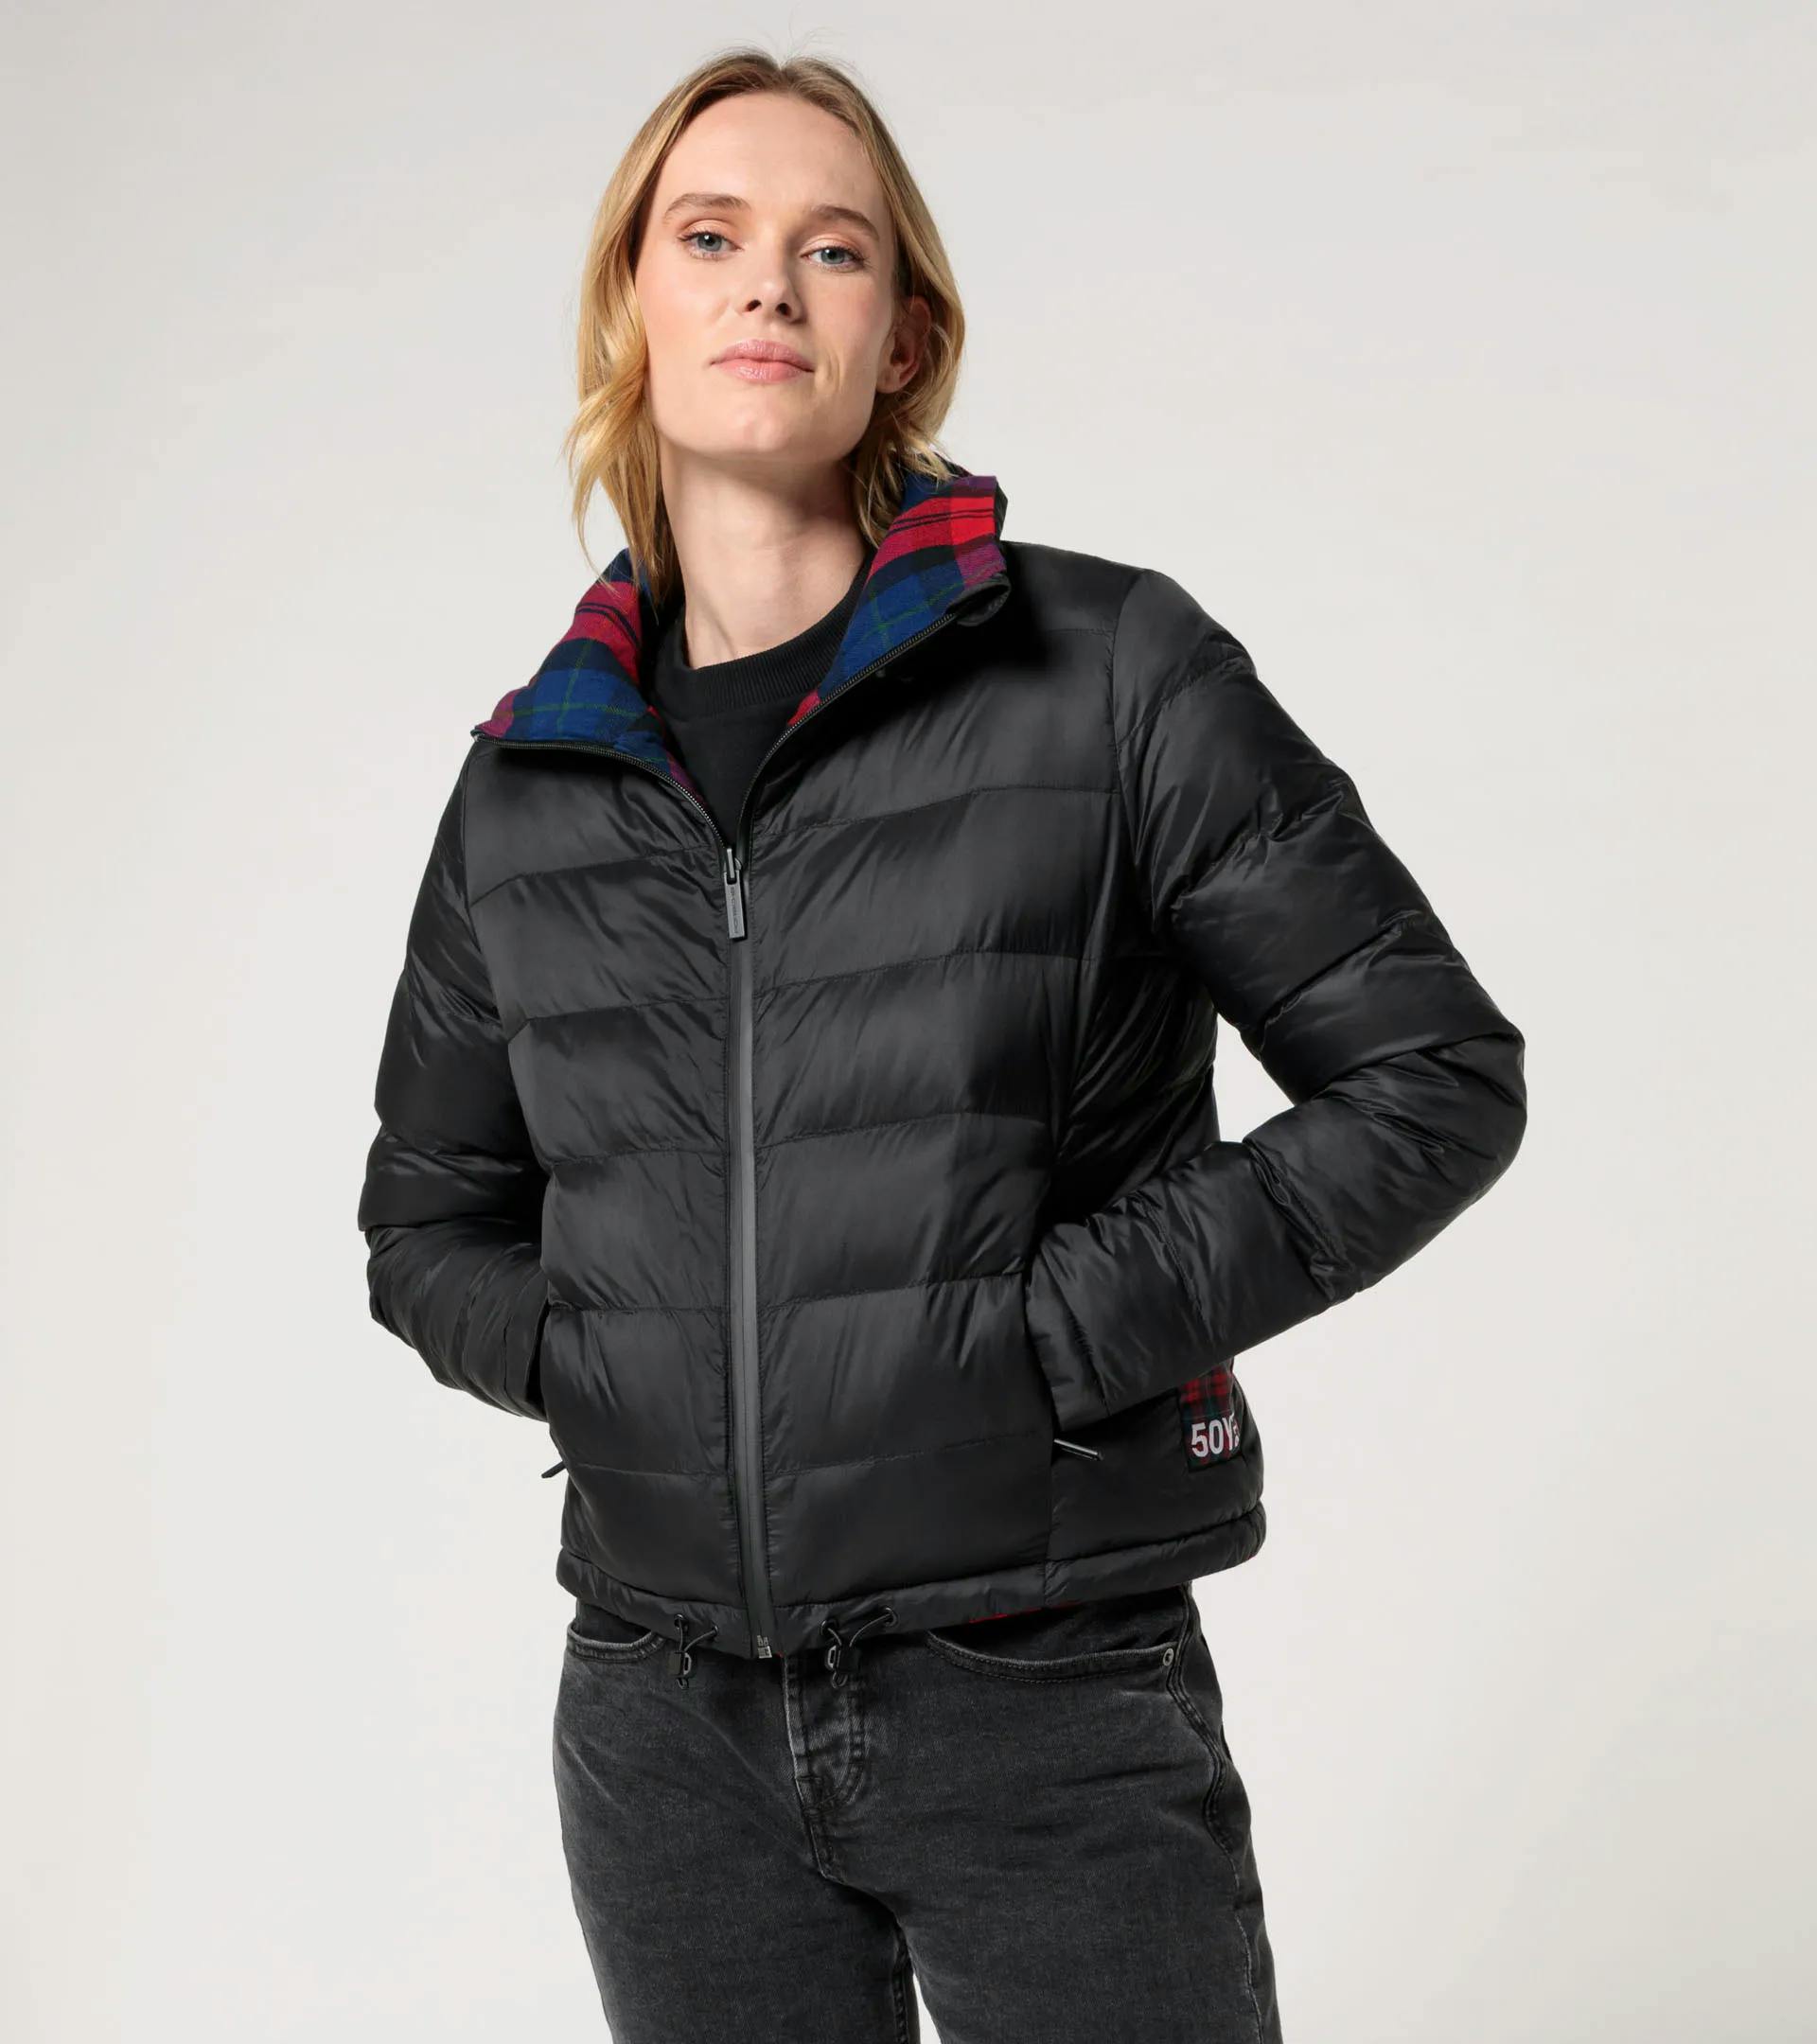 Reversible women's jacket – Turbo No. 1 8